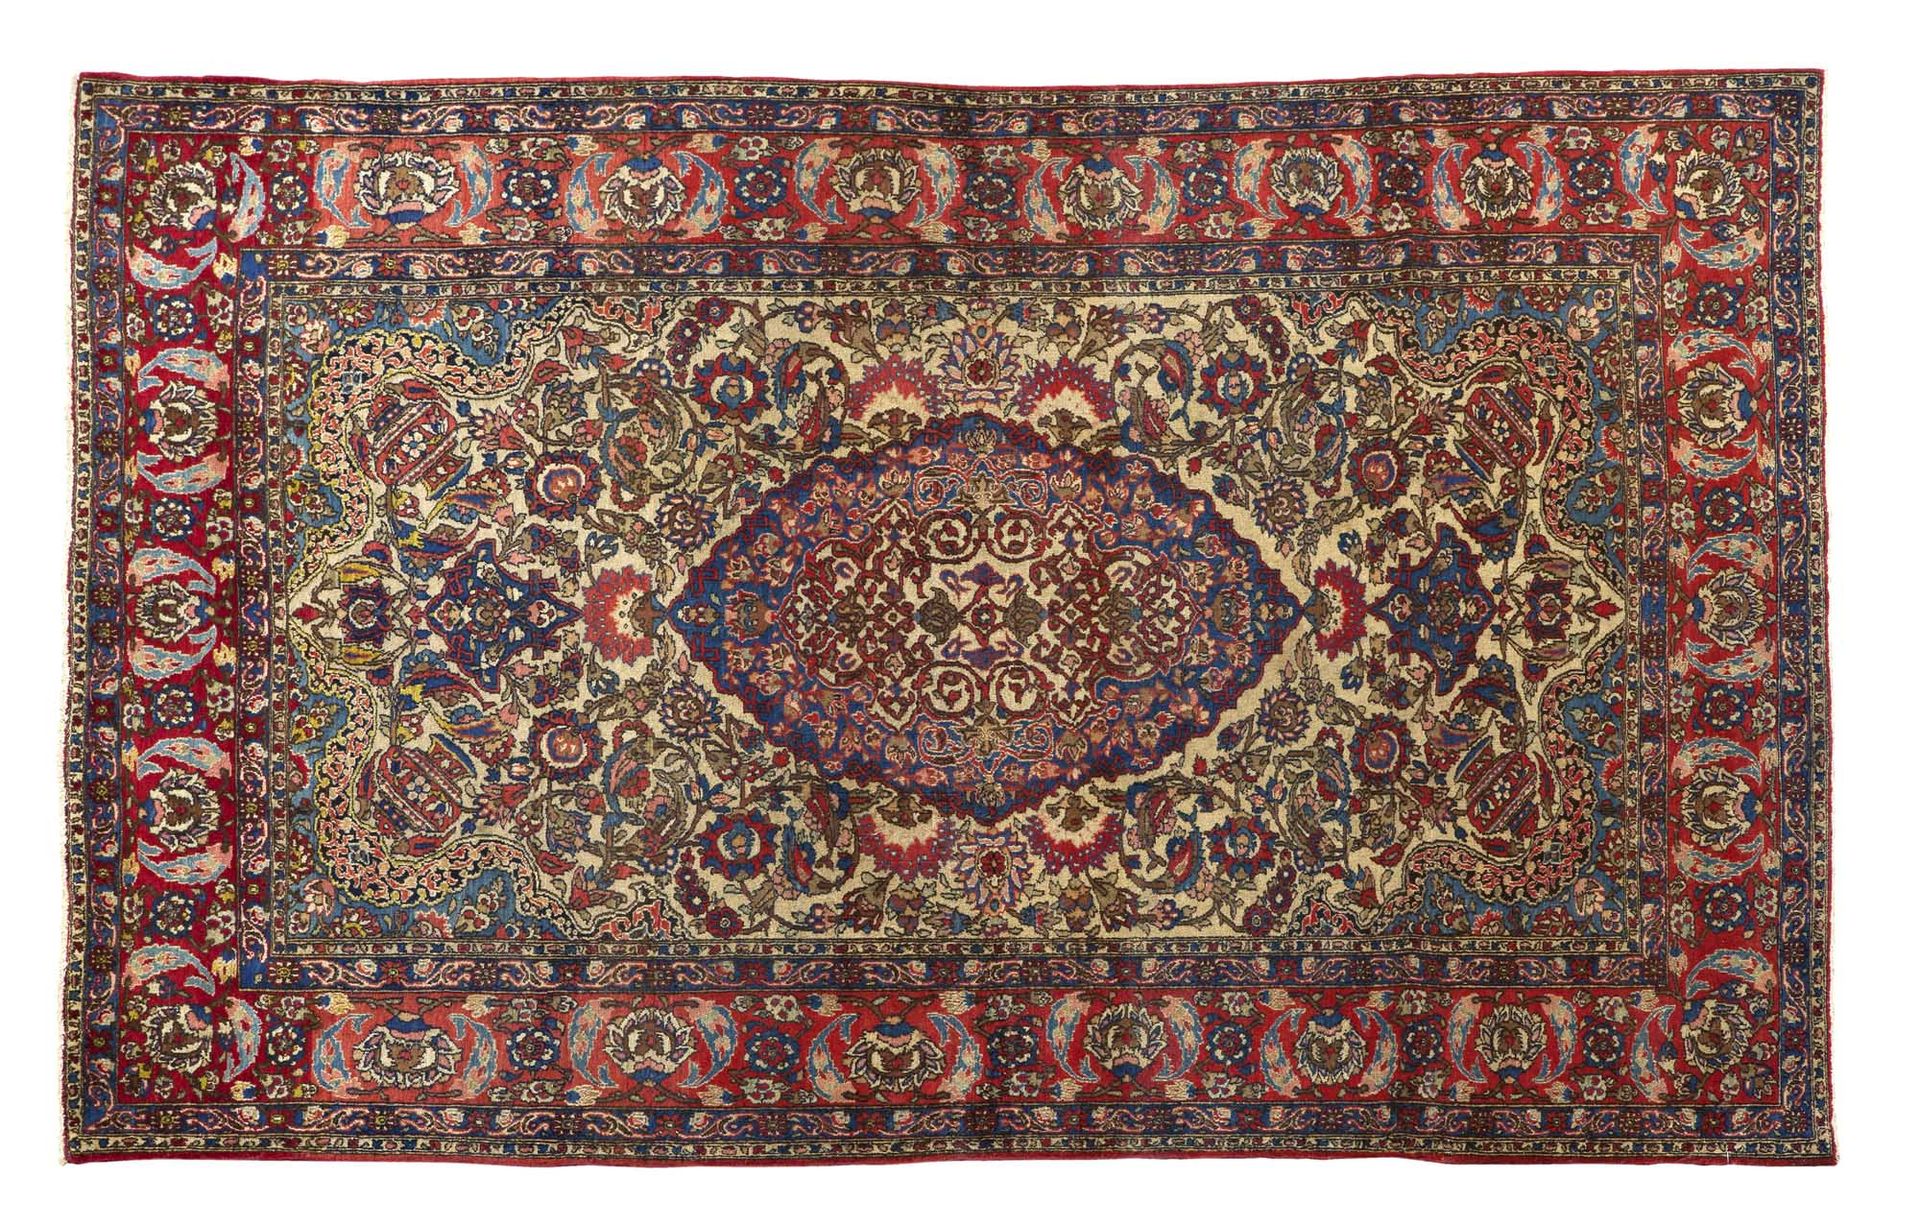 Null Fin tapis ISPAHAN, (Perse), fin du 19e siècle

Dimensions : 211 x 141cm

Ca&hellip;